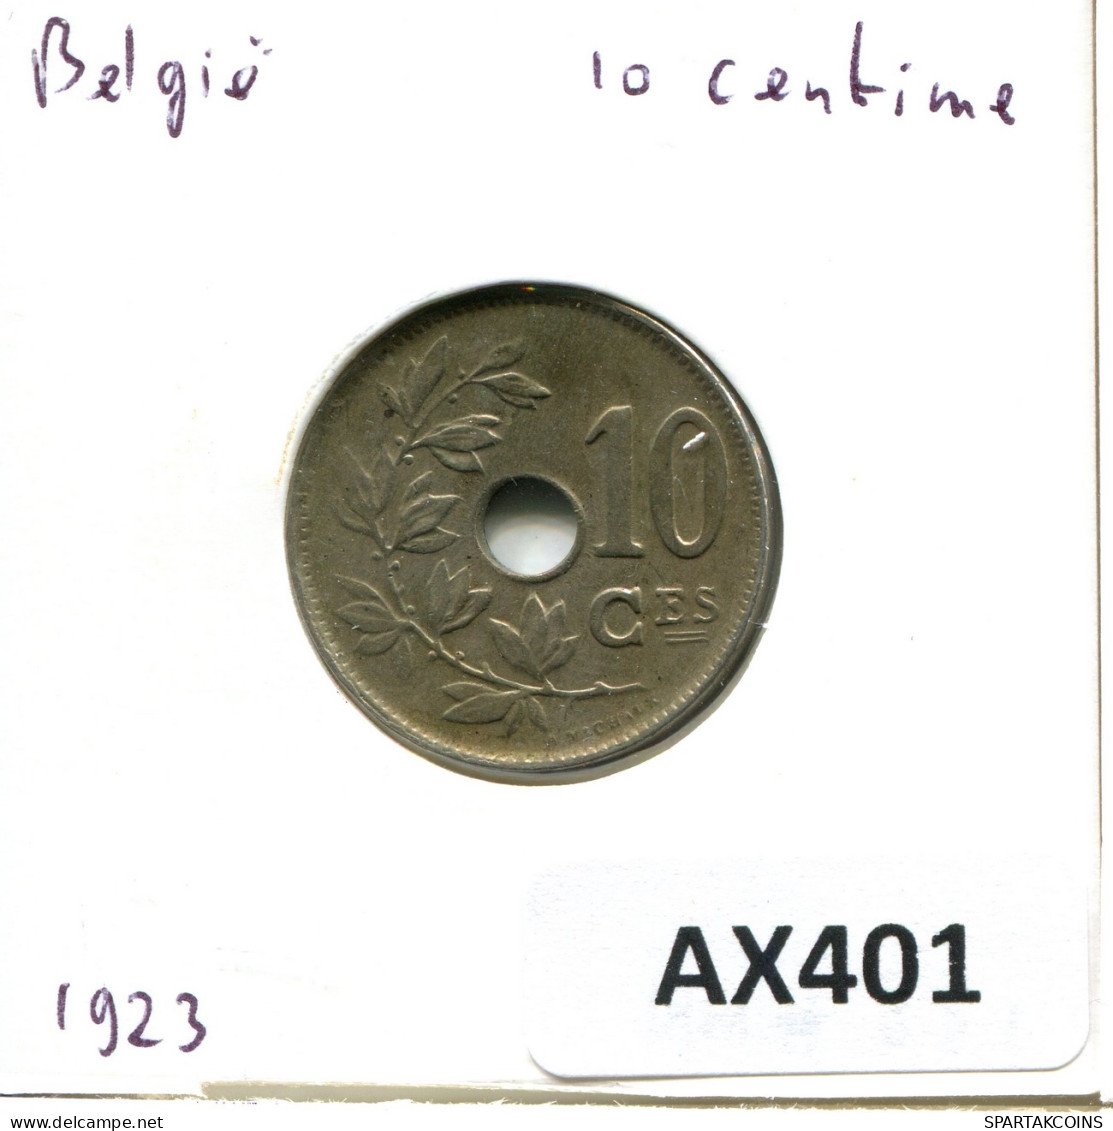 10 CENTIMES 1923 BÉLGICA BELGIUM Moneda DUTCH Text #AX401.E - 10 Cents